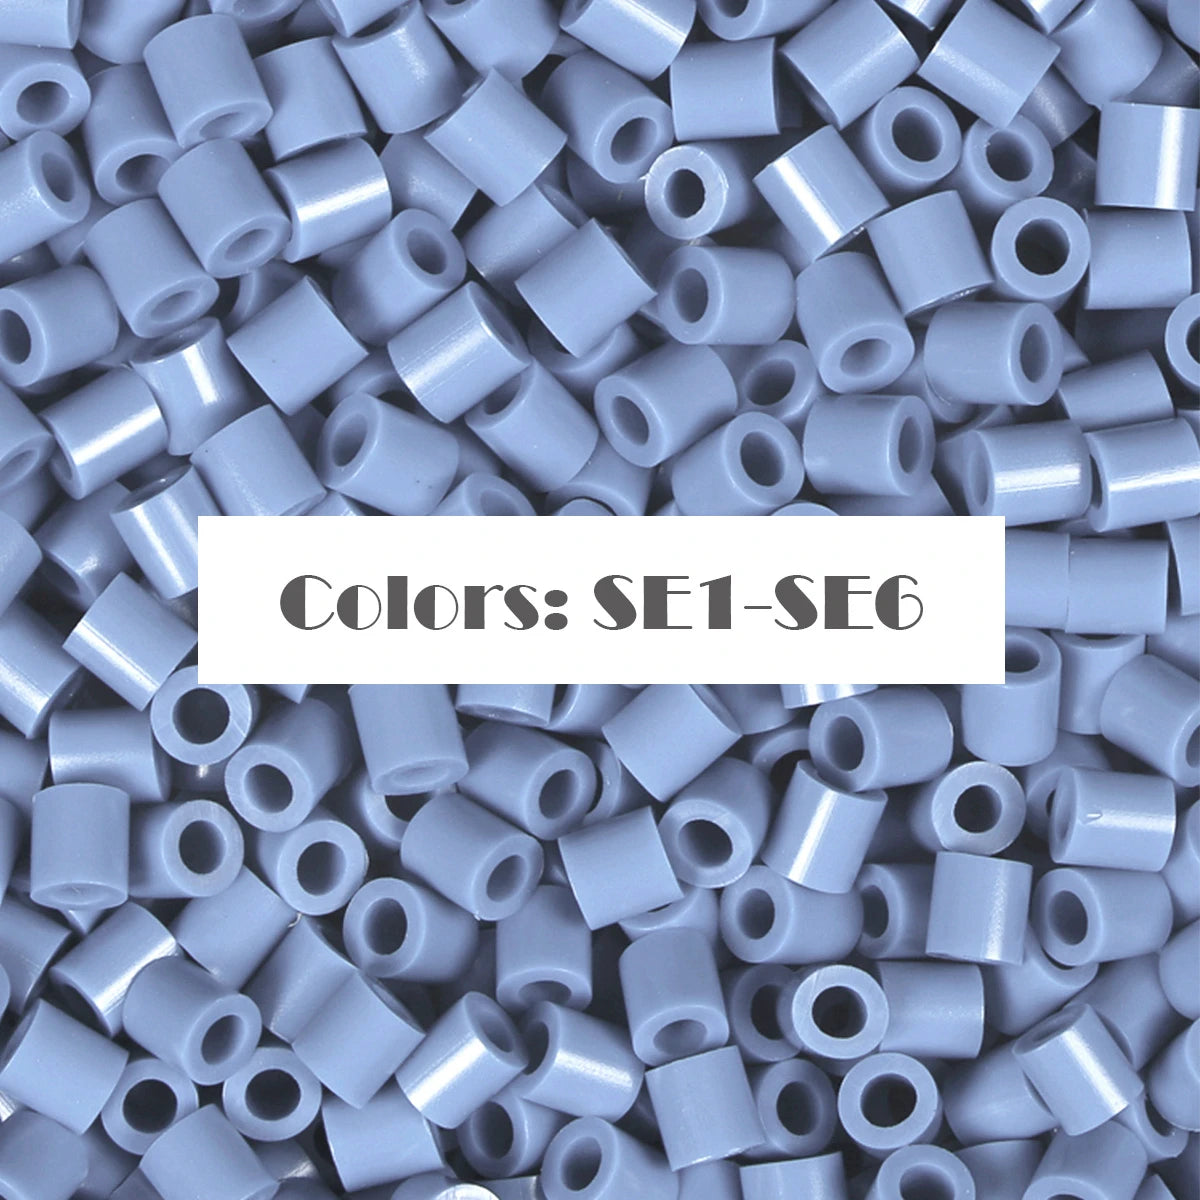 (SE1-SE6) Nieuwe kleurenserie Blauw S-1KG in bulk